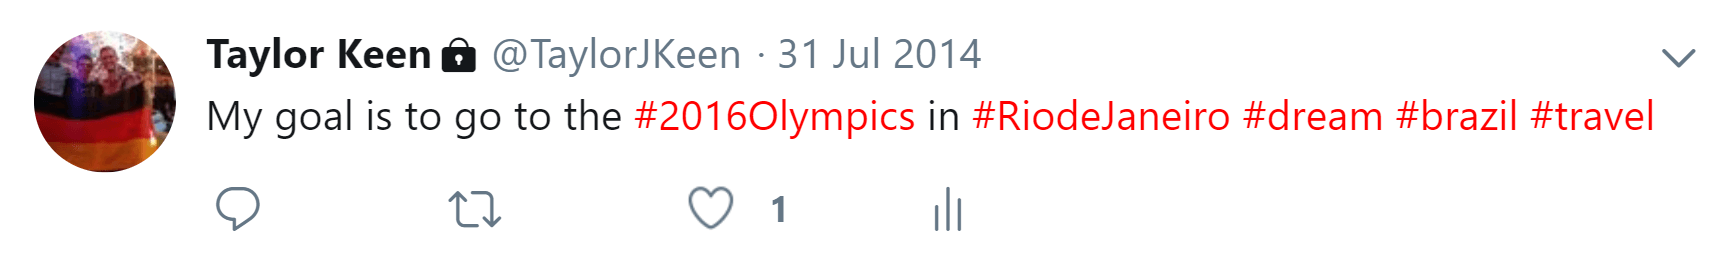 Olympic dream tweet